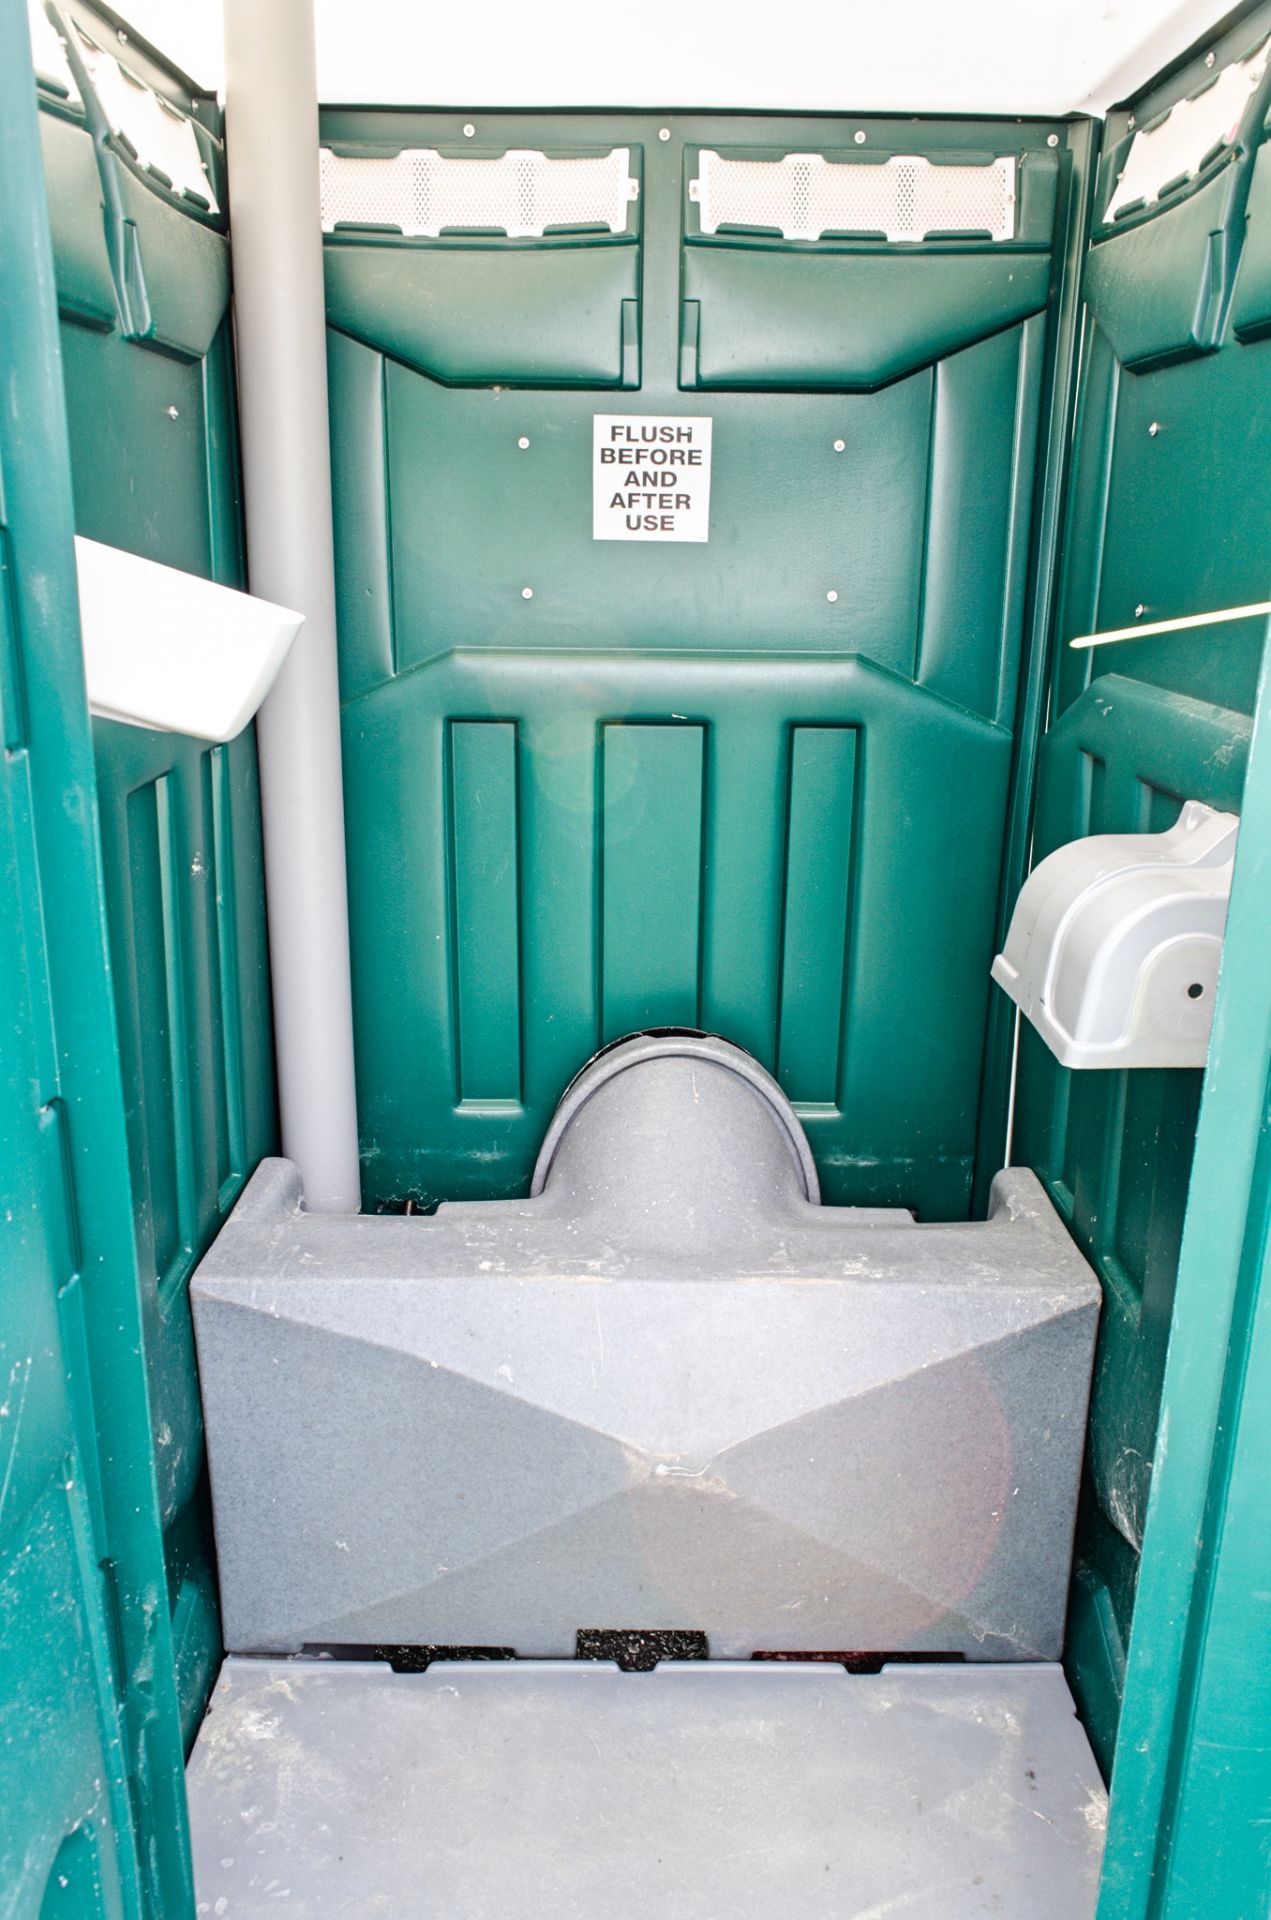 Plastic portable toilet unit - Image 2 of 2